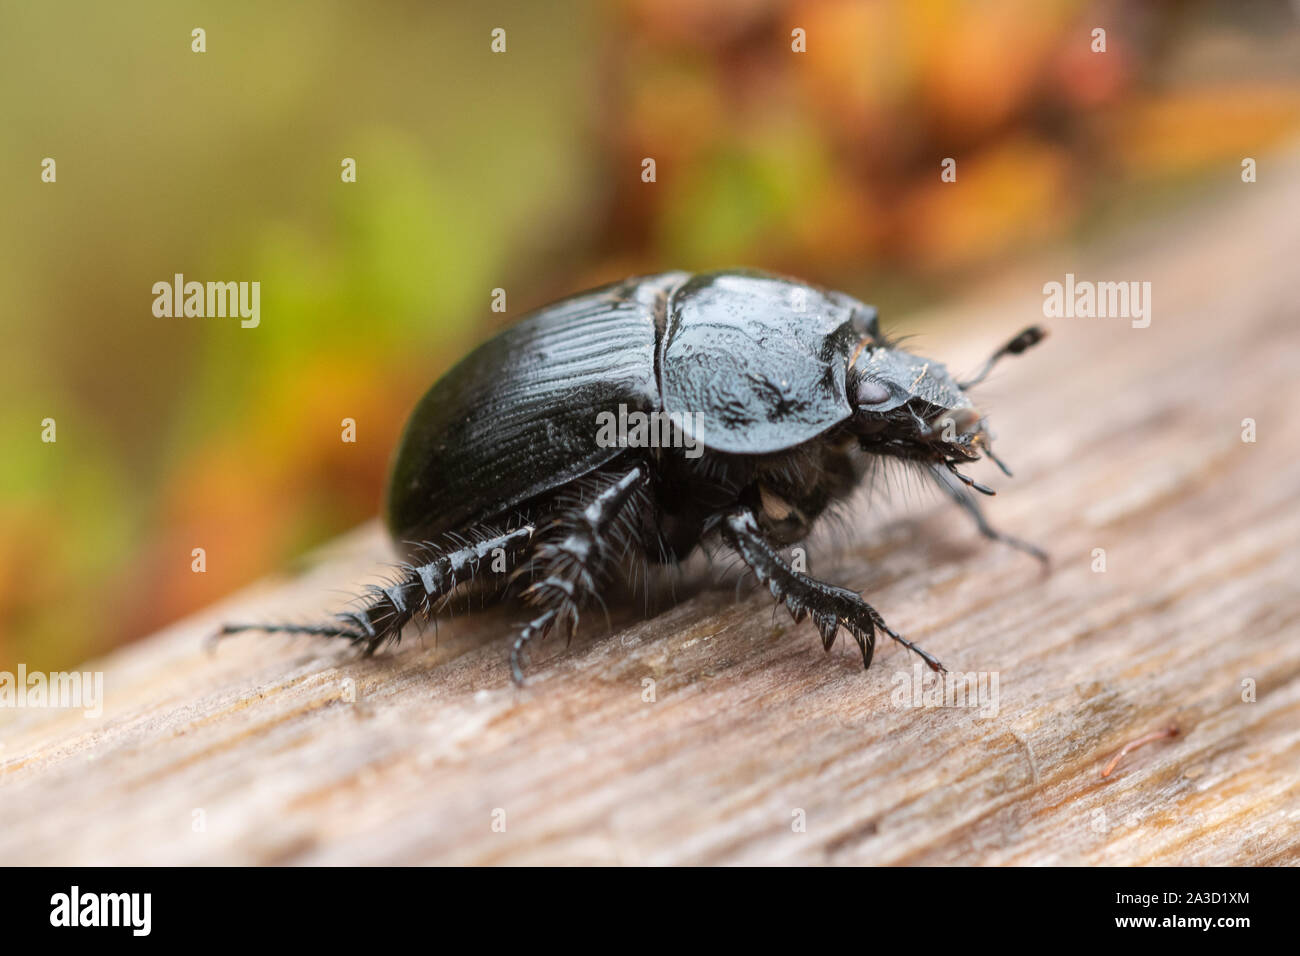 Close-up of a black beetle on heathland, UK Stock Photo